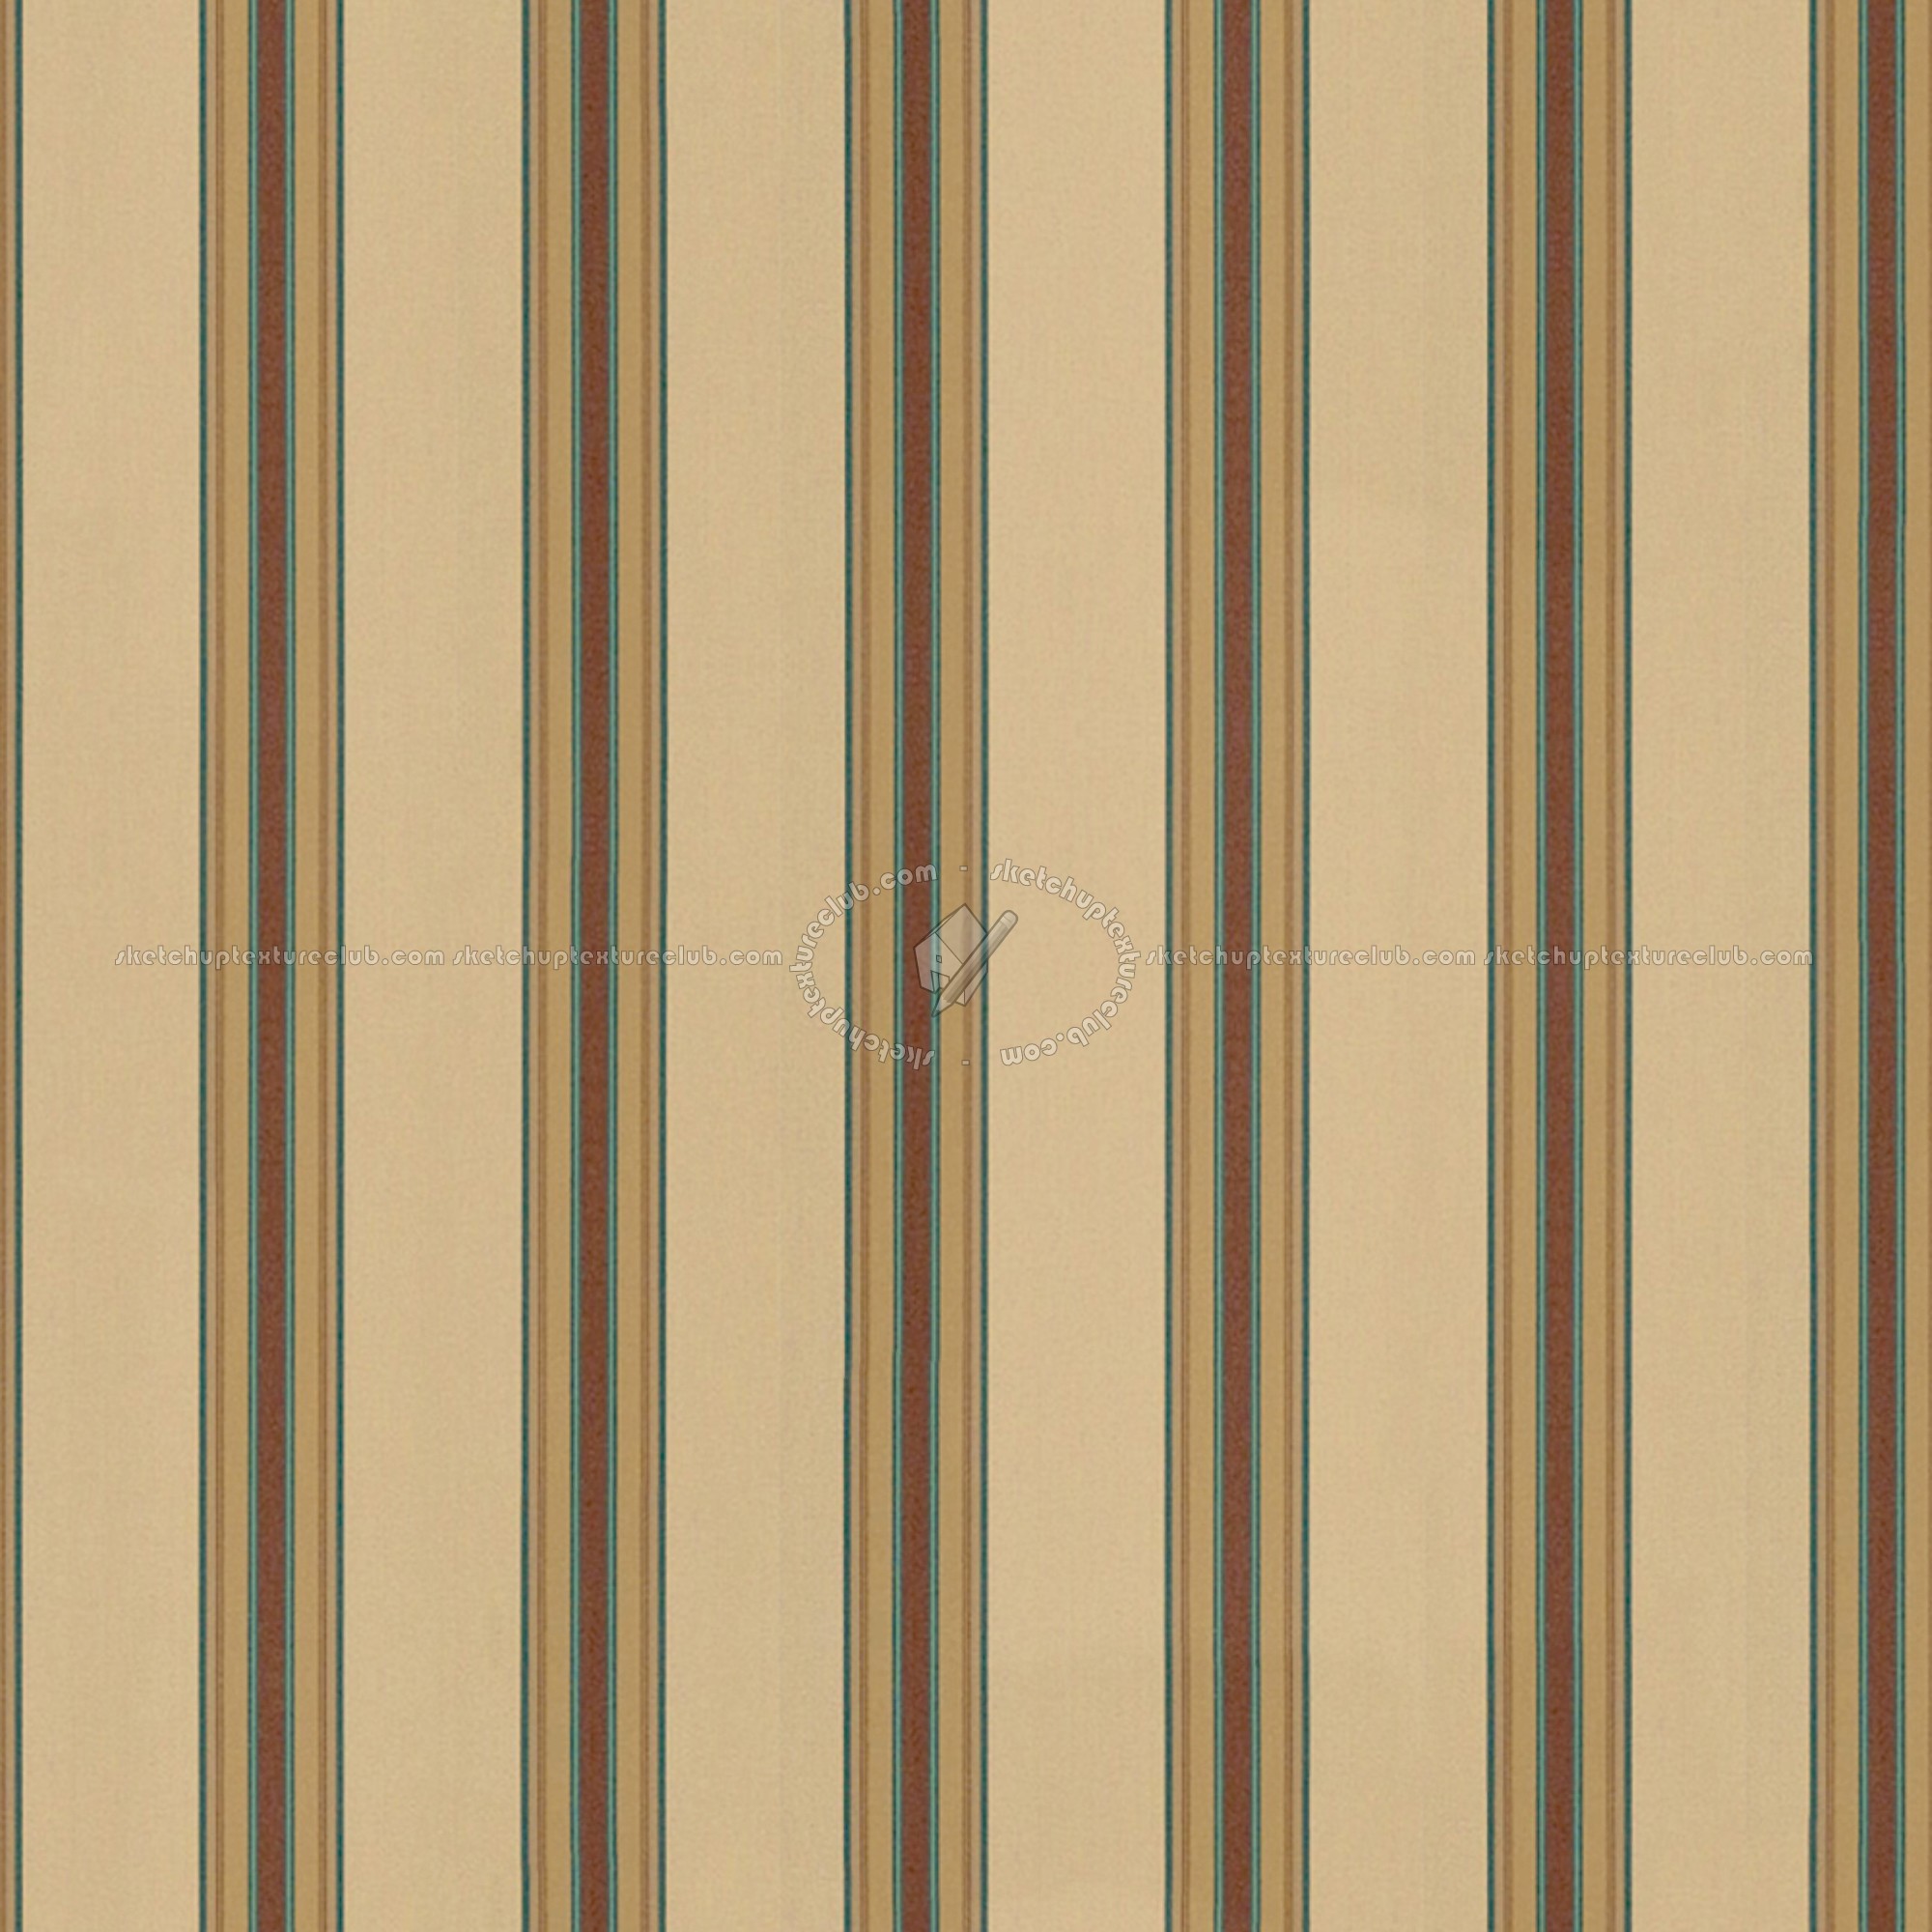 2000x2000 Cream brown striped wallpaper texture seamless 11612